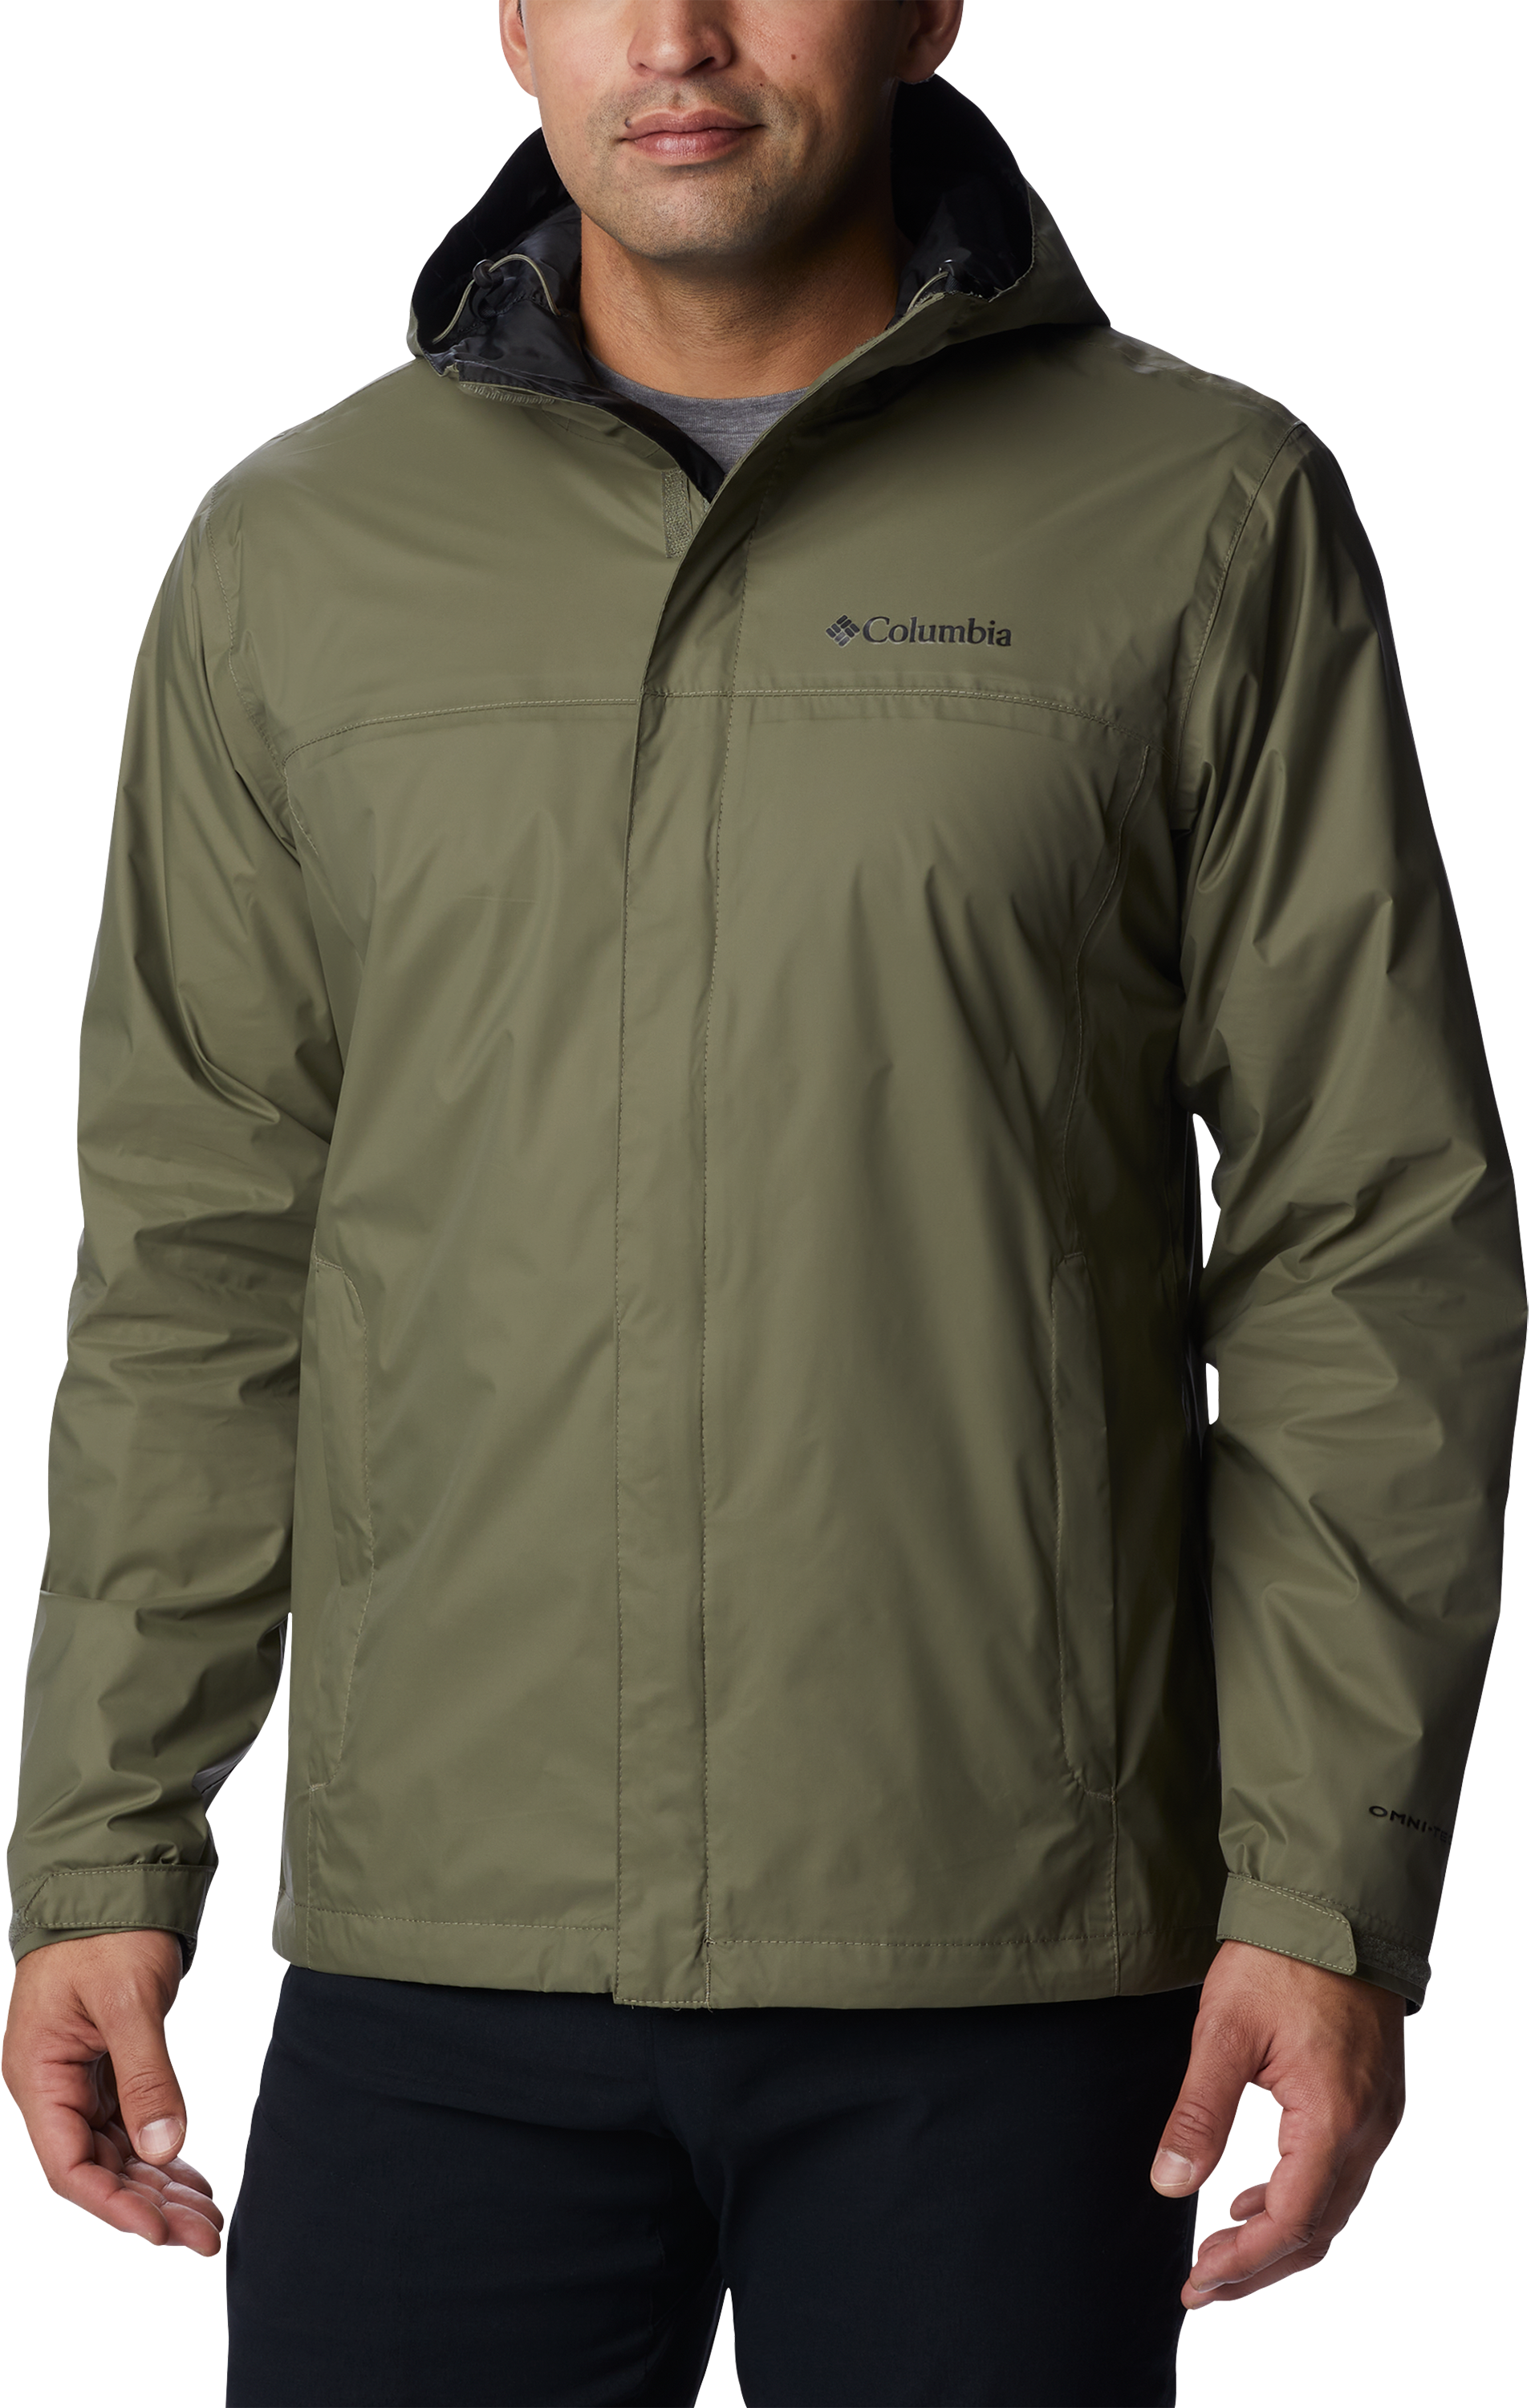 Columbia Watertight II Jacket for Men - Stone Green - S